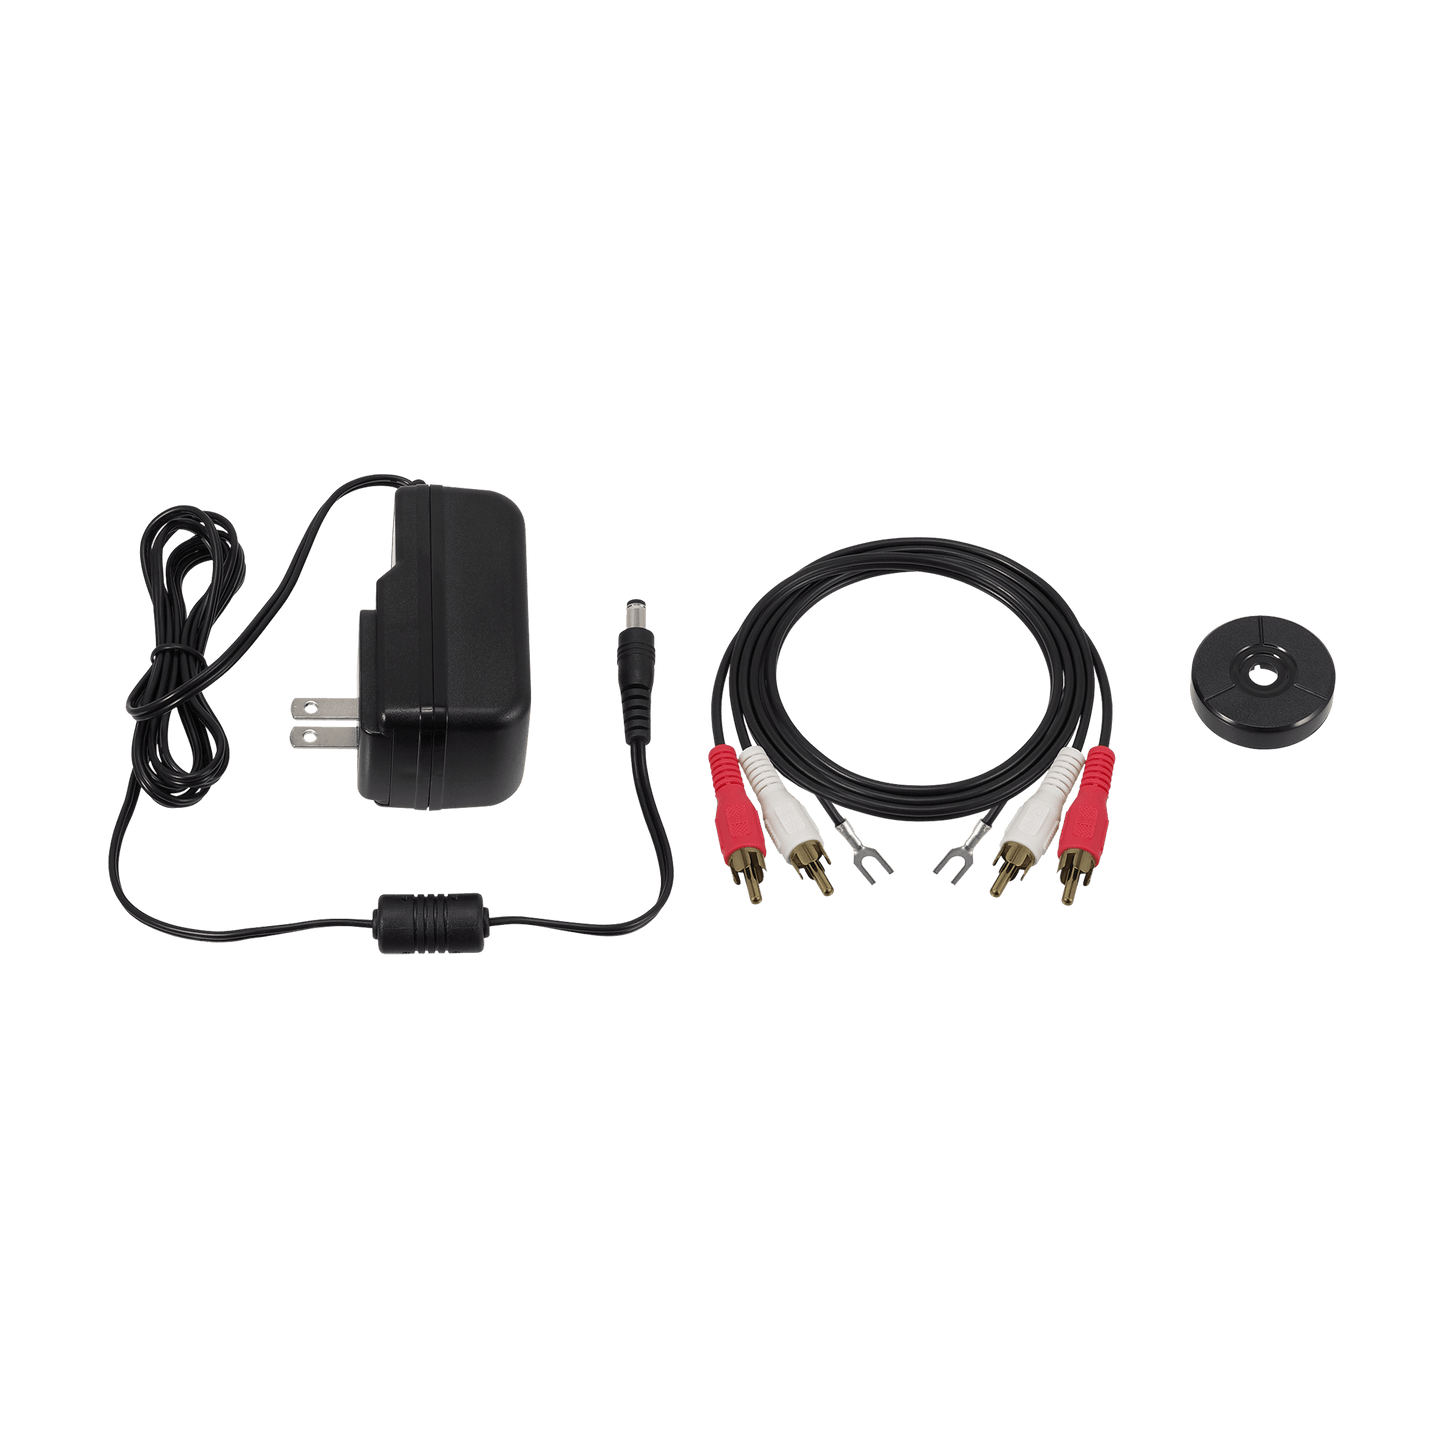 Audio-Technica AT-LP120XUSB Direct-Drive Turntable, Black